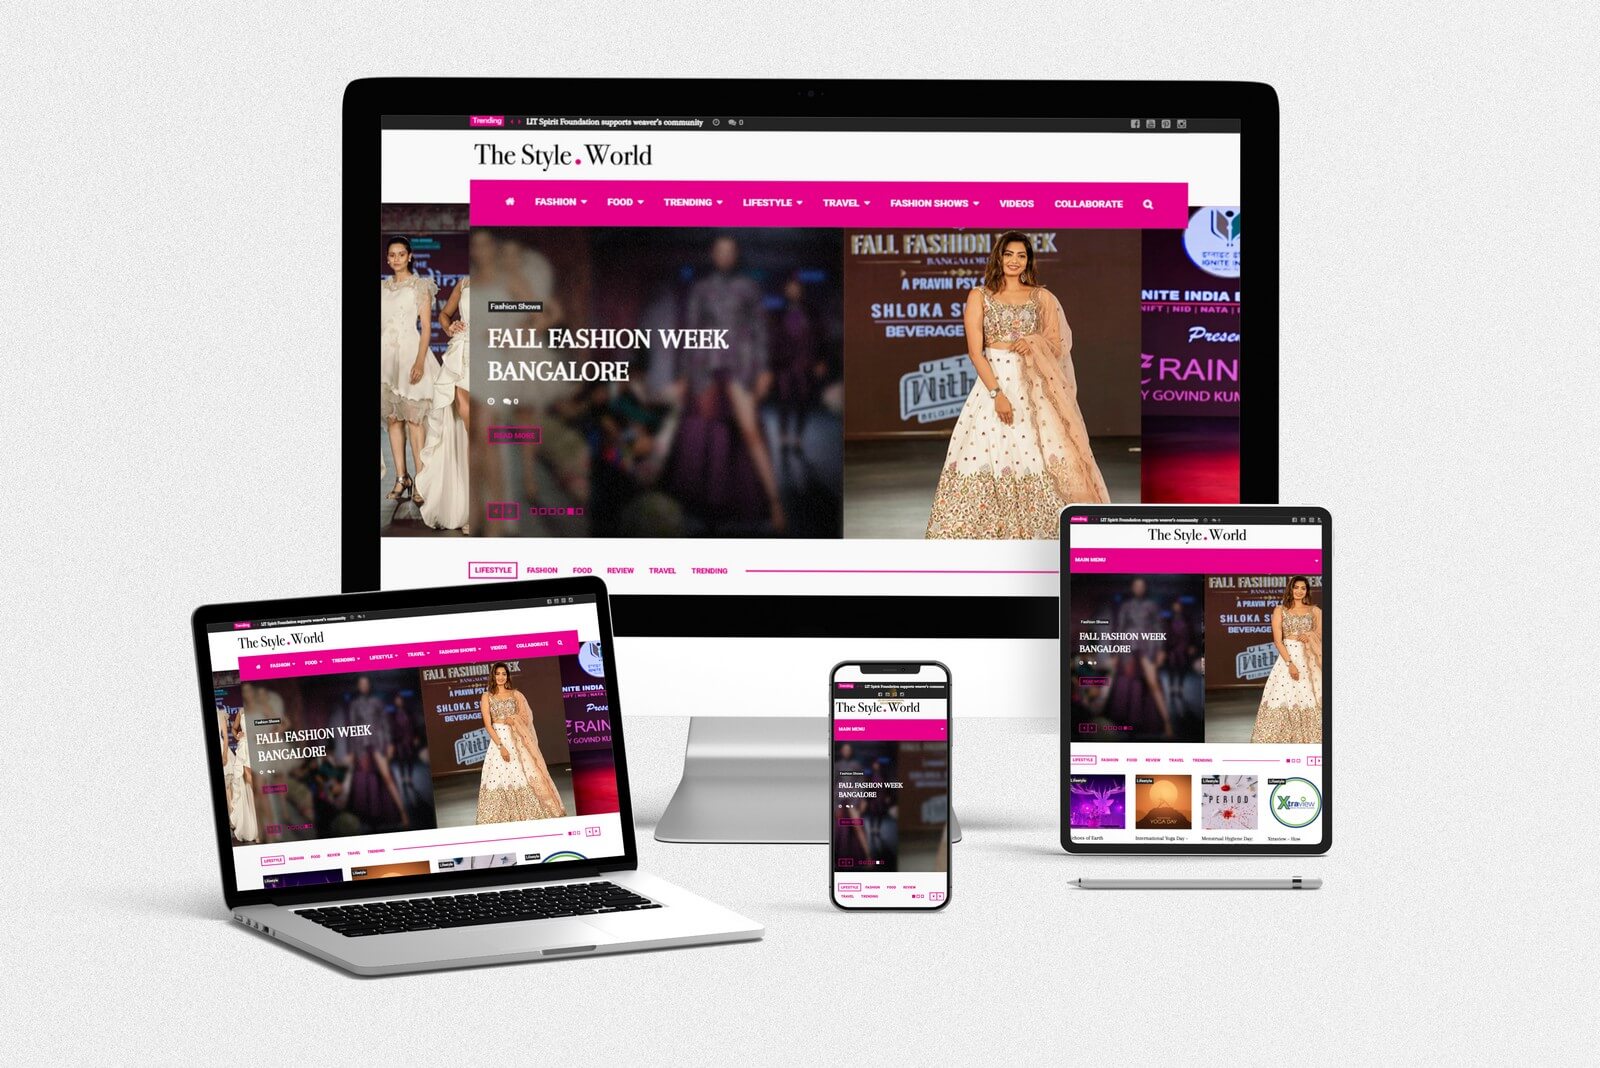 TSW Invalesco Creations Web Design and Digital Marketing Company Empowering Brands Digitally